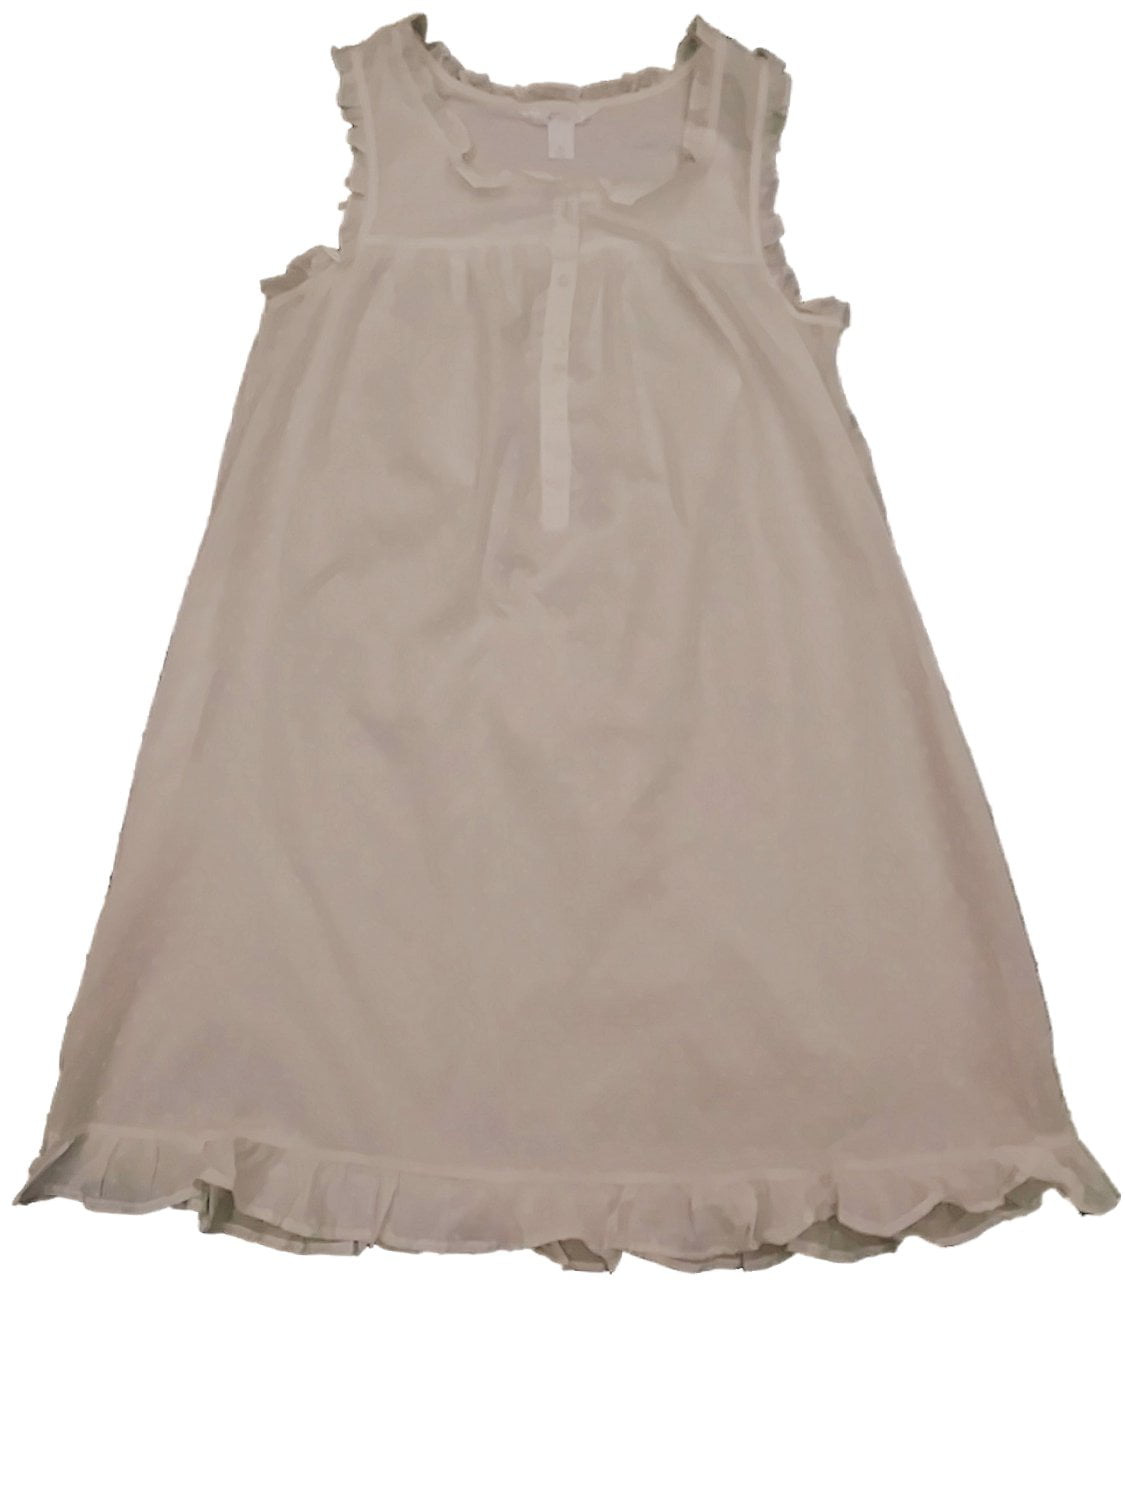 Adonna - Womens Dimpled White Cotton Nightie Night Gown Tank Top Sleep